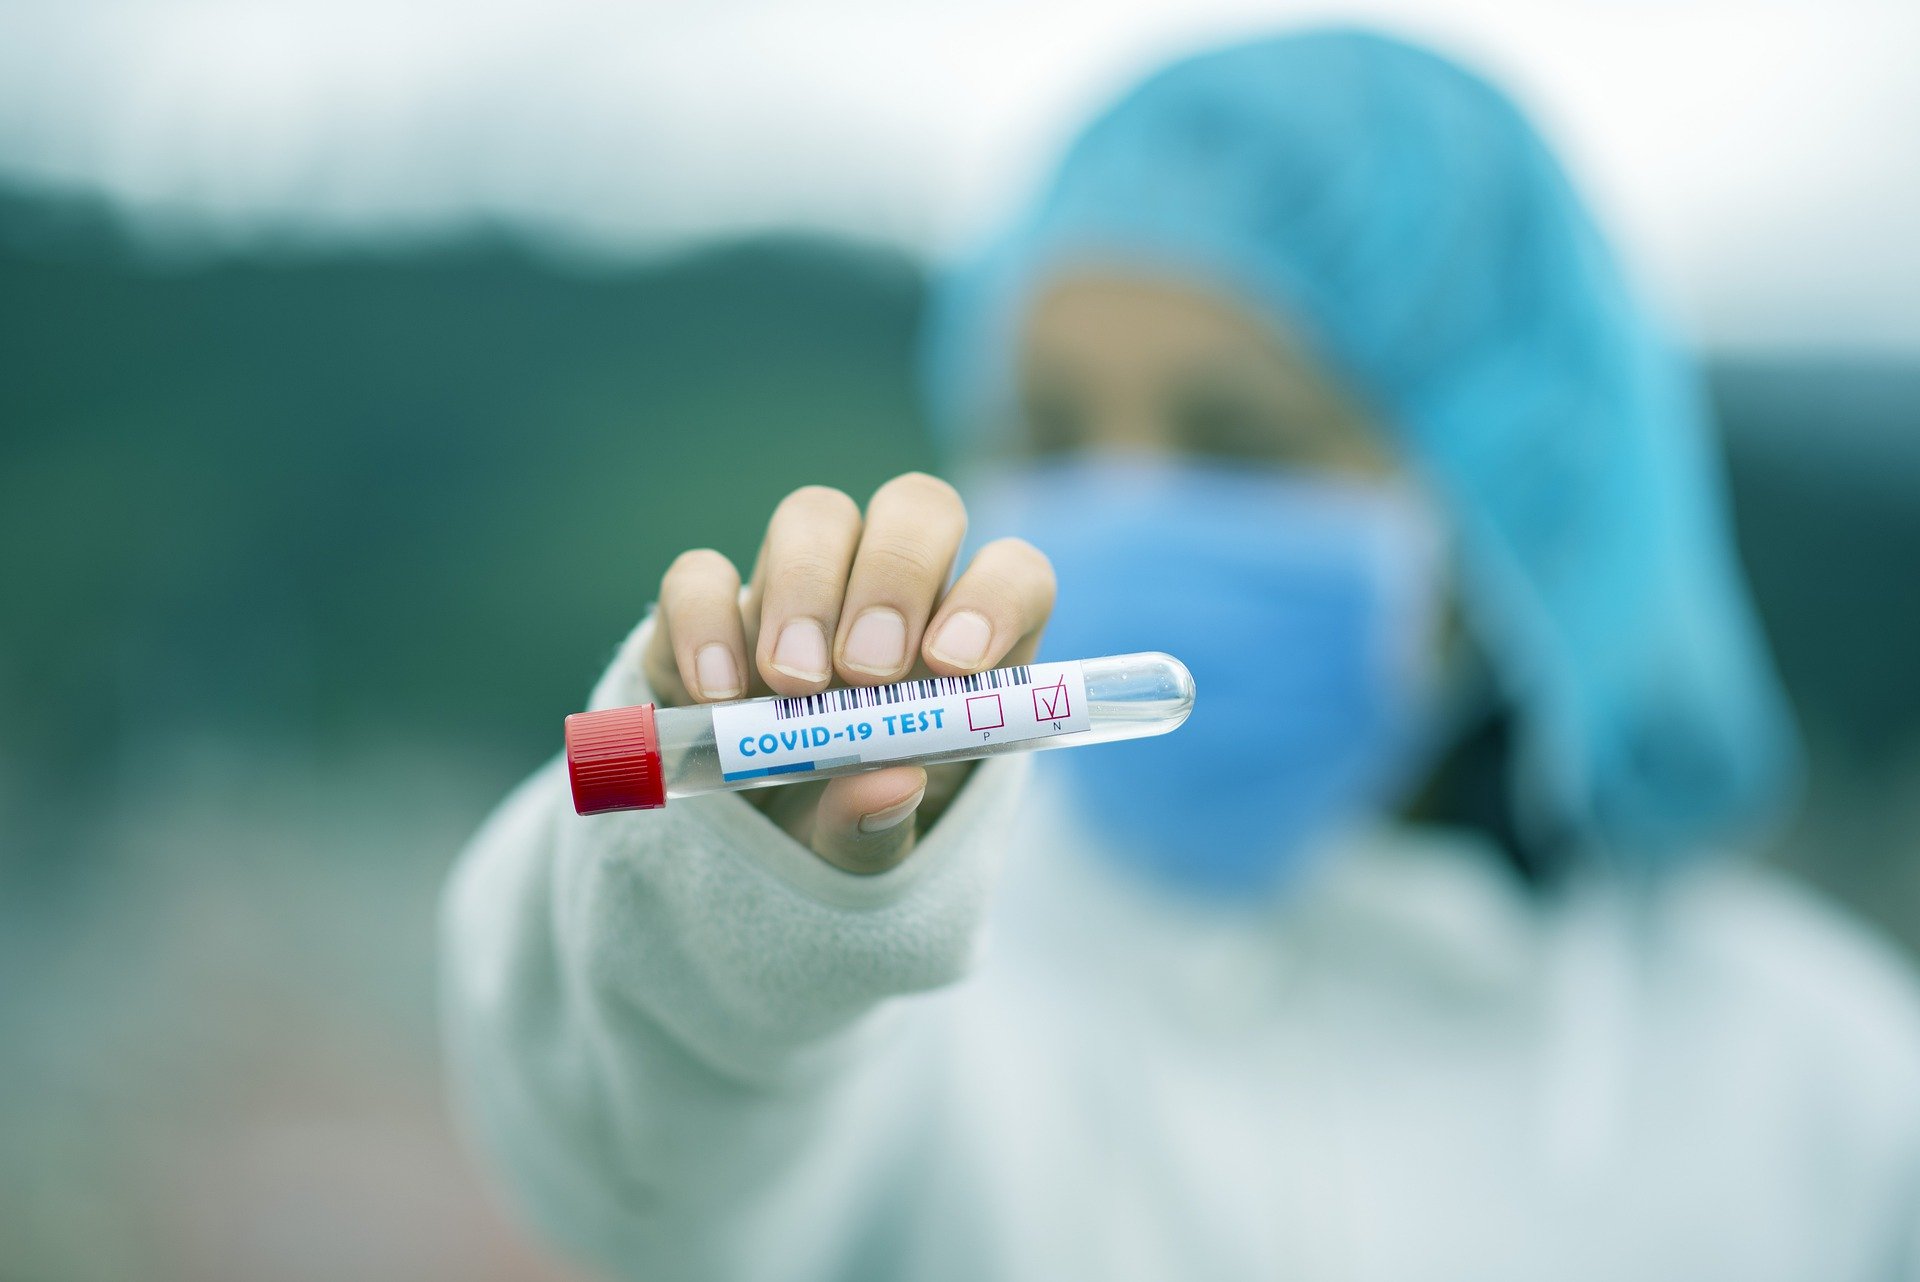 Coronavirus: in Toscana 2 nuovi casi, 1 decesso, 8 guarigioni